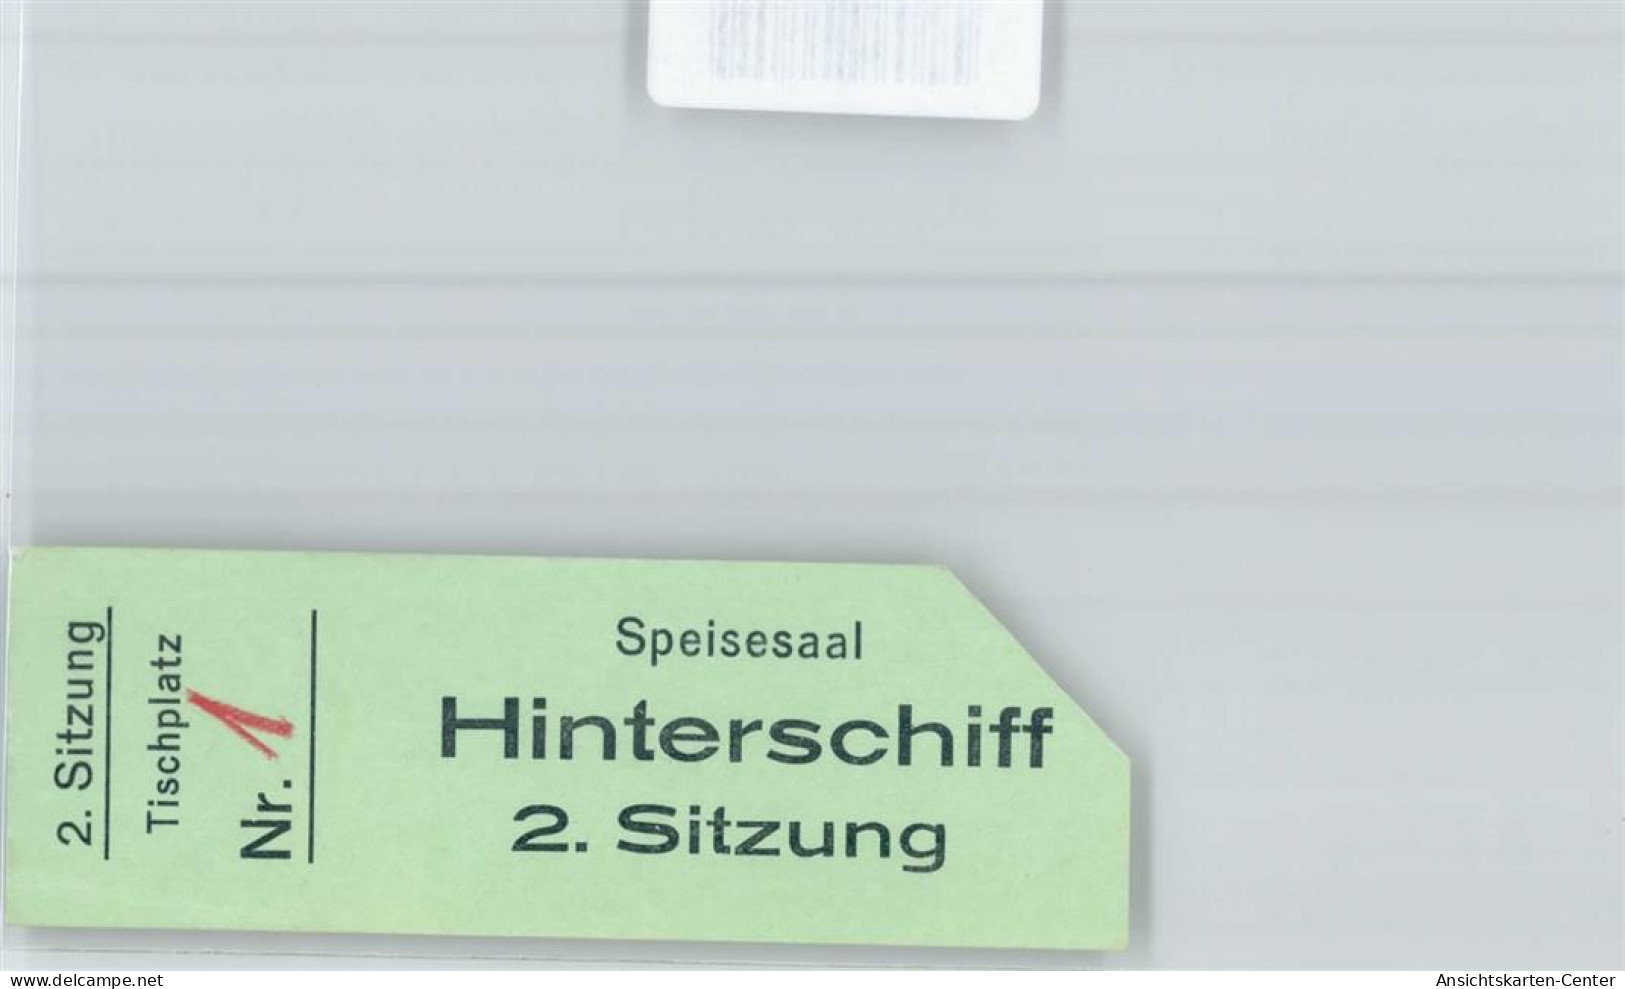 51153906 - Hinterschiff , Tischkarte - Exhibitions